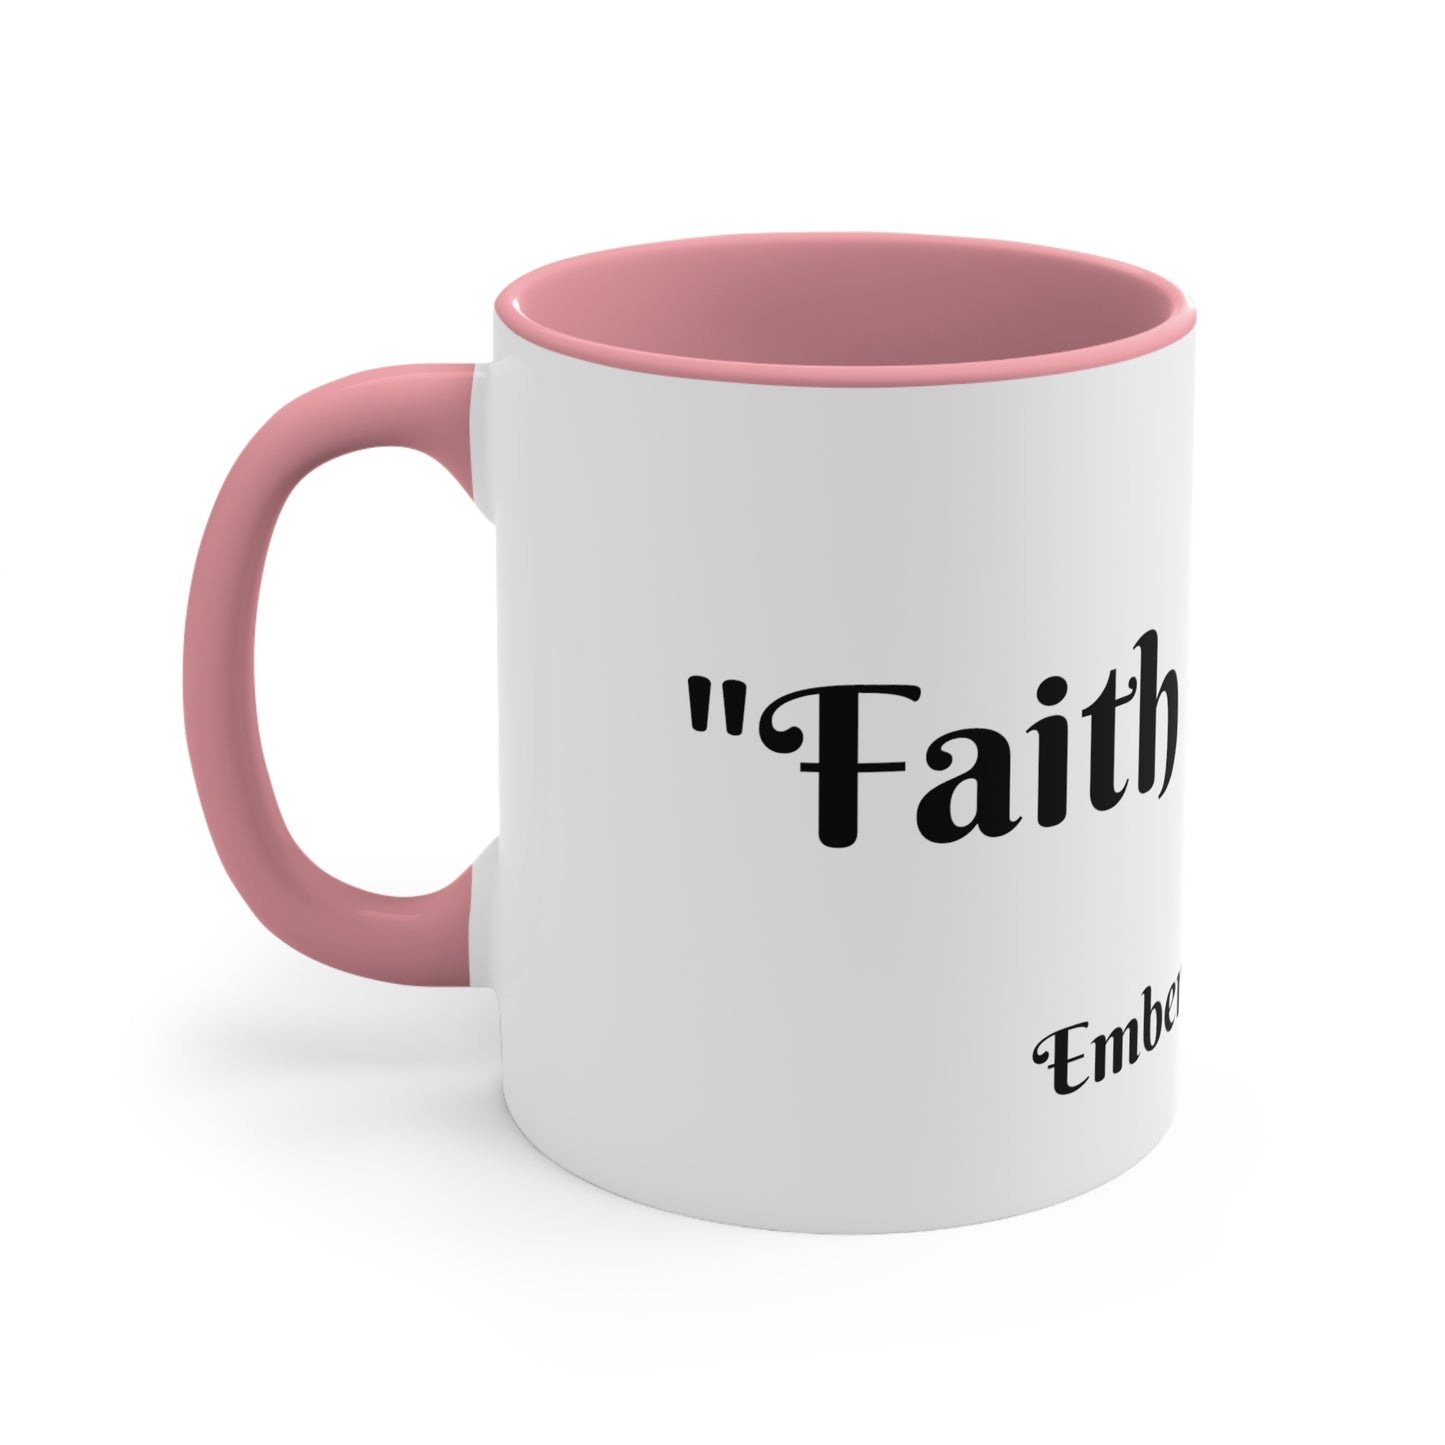 Ember’s Industry Faith n Hope mug